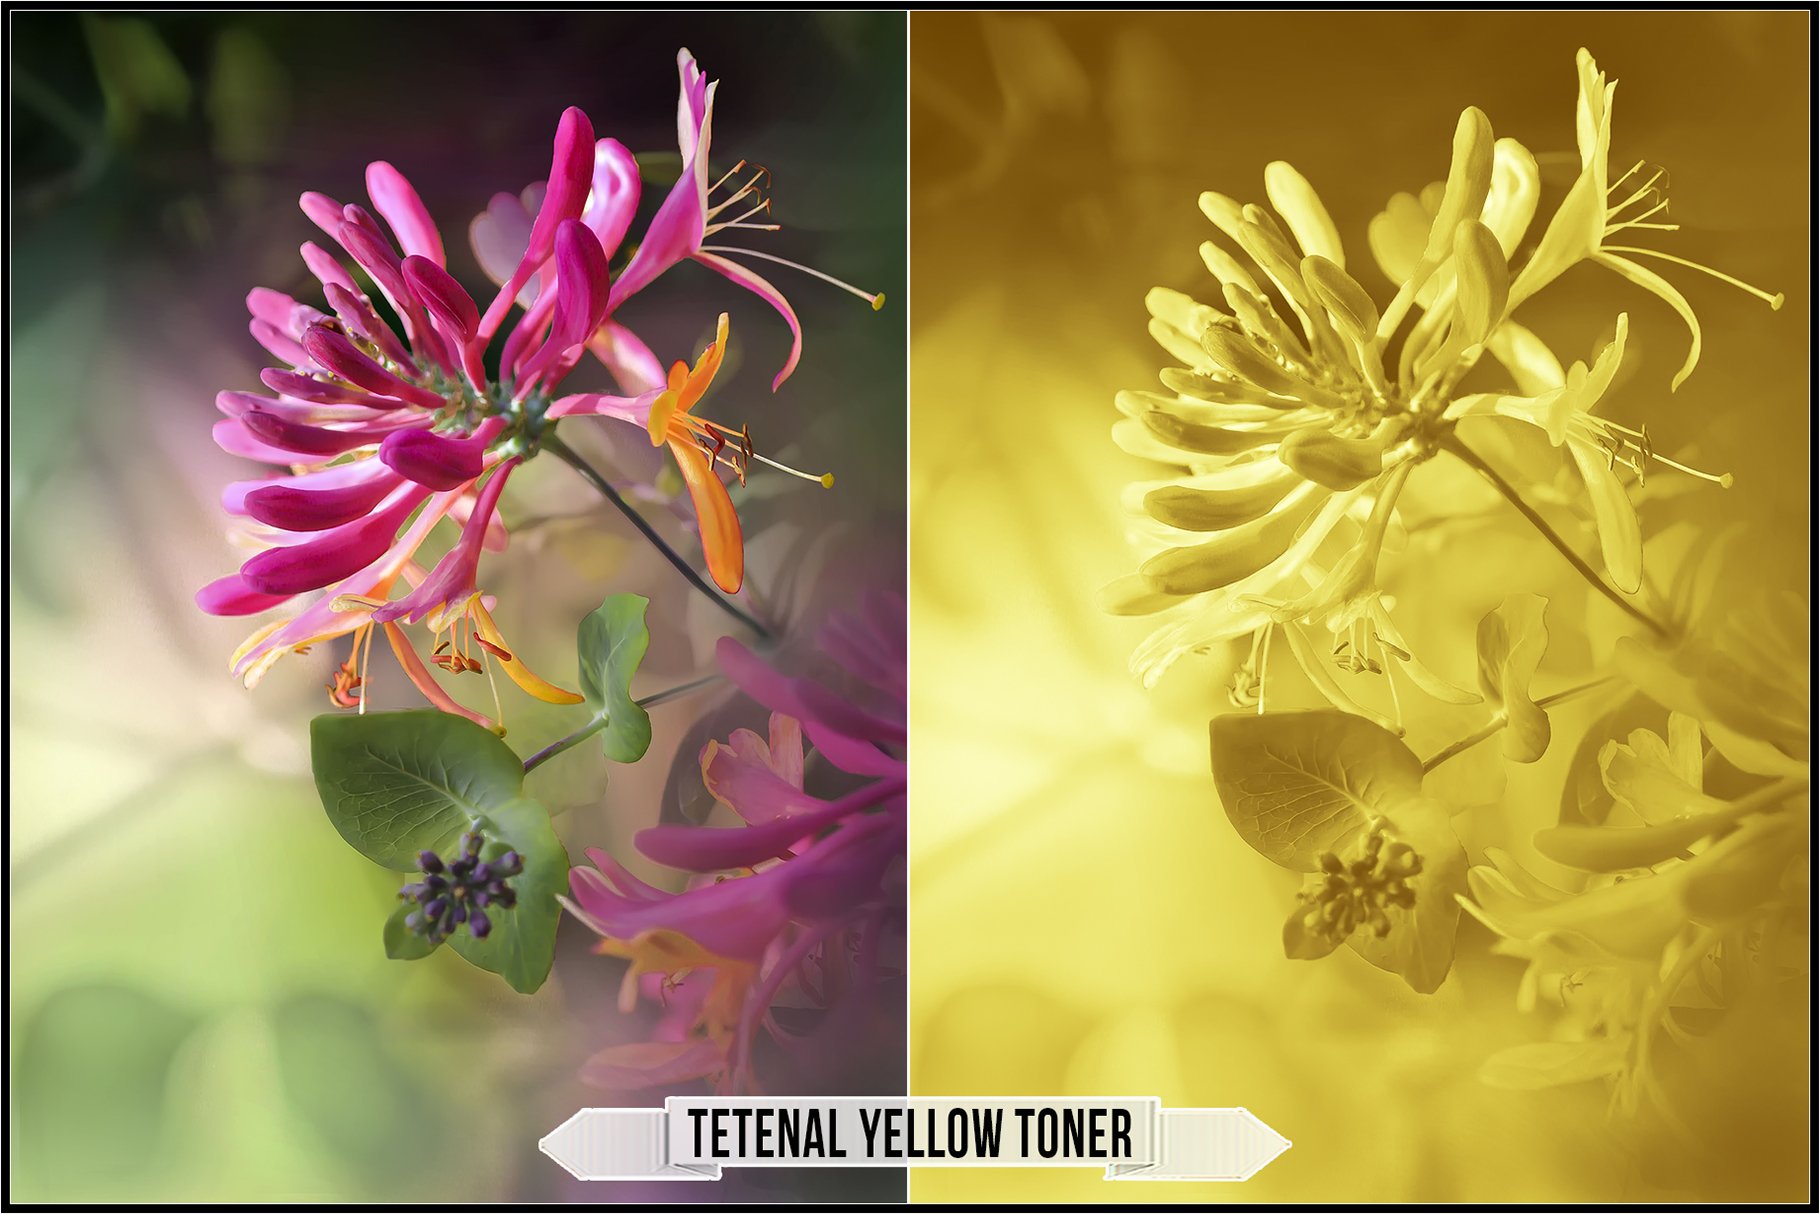 tetenal yellow toner 651